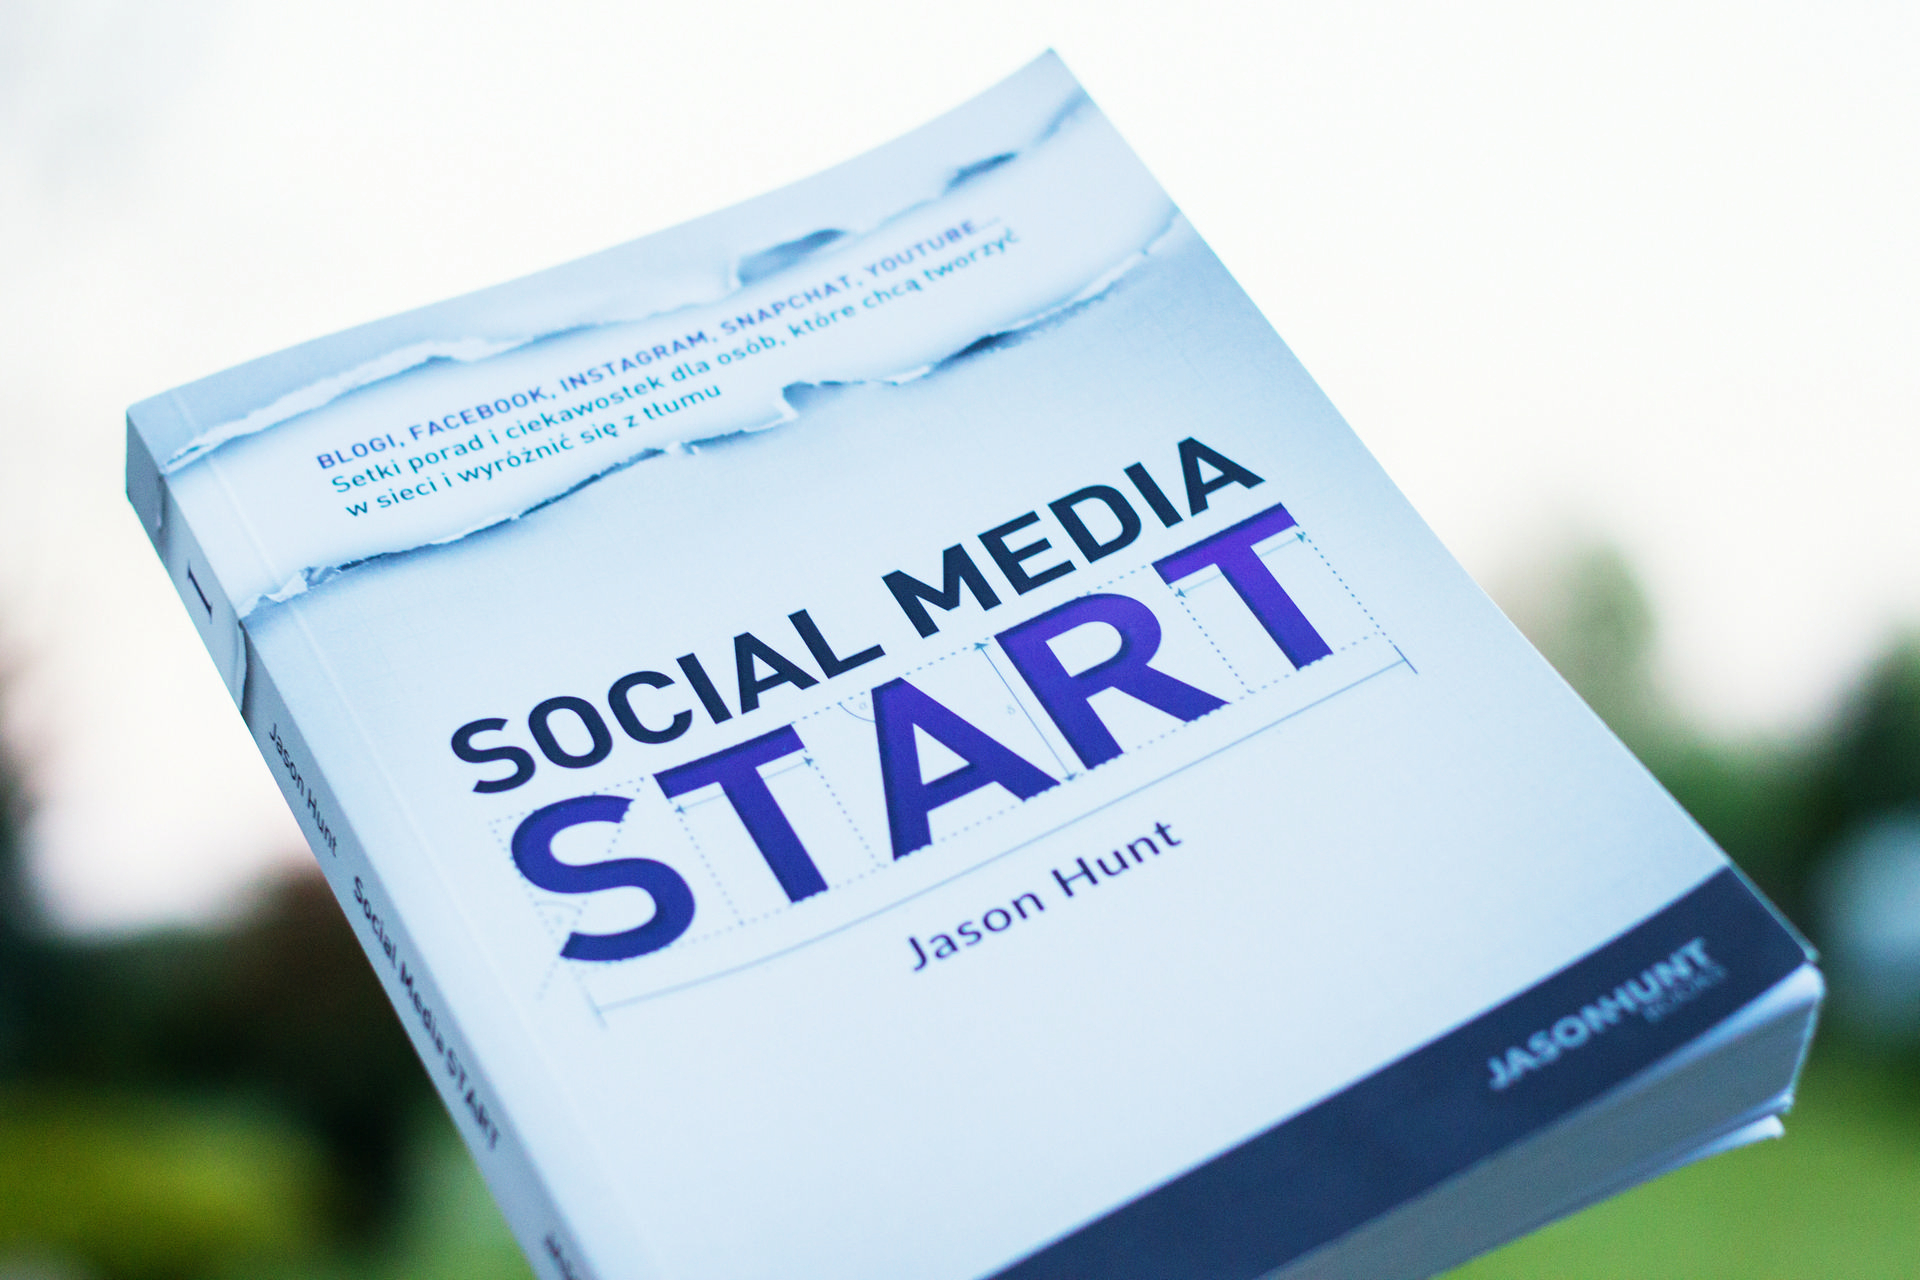 Social Media Start - Jak wystartować w social media?